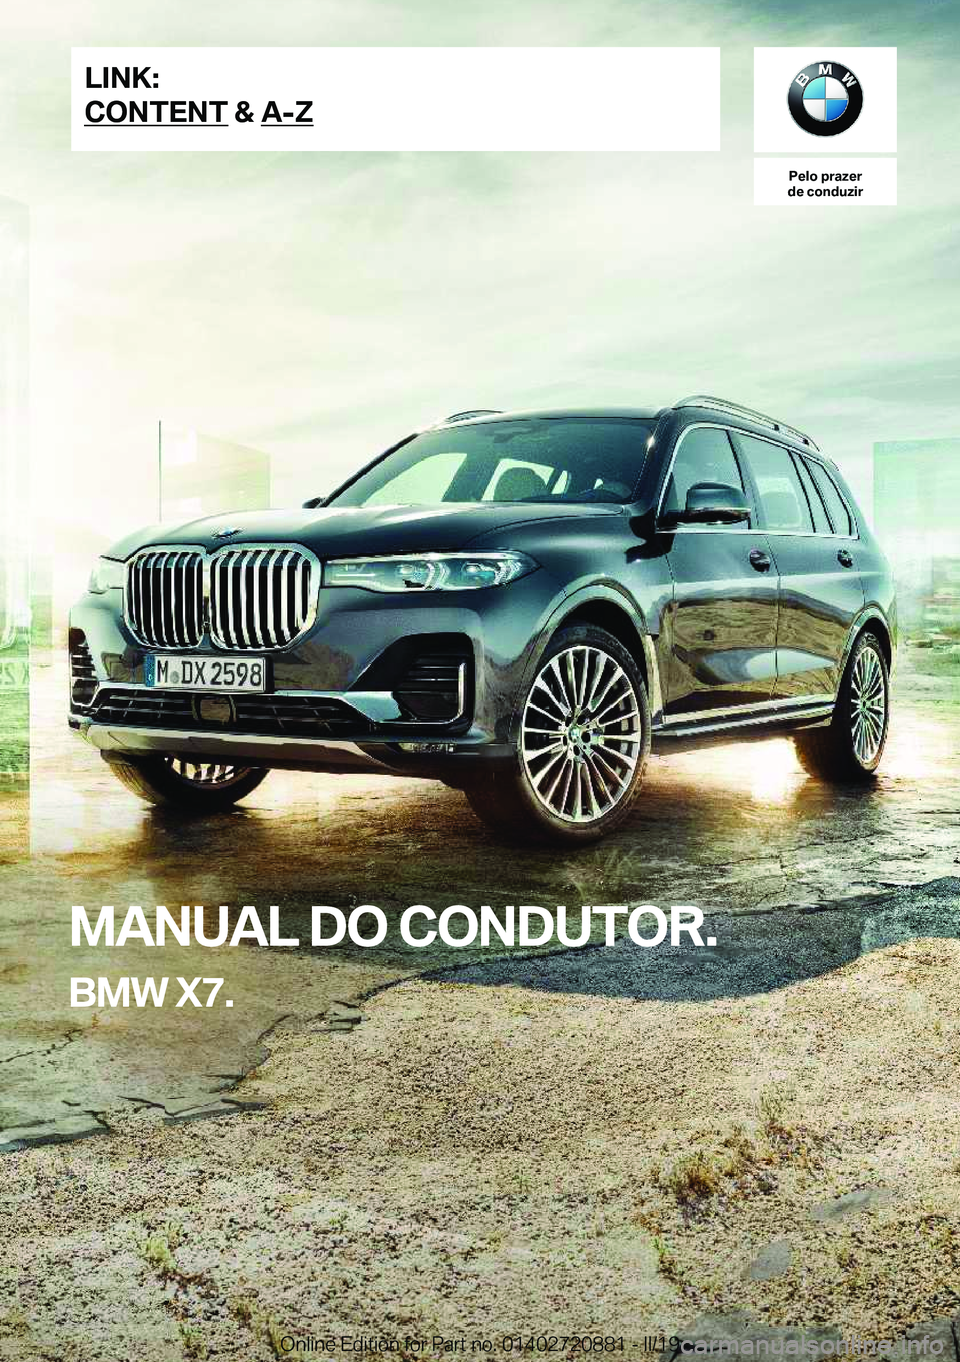 BMW X7 2019  Manual do condutor (in Portuguese) �P�e�l�o��p�r�a�z�e�r
�d�e��c�o�n�d�u�z�i�r
�M�A�N�U�A�L��D�O��C�O�N�D�U�T�O�R�.
�B�M�W��X�7�.�L�I�N�K�:
�C�O�N�T�E�N�T��&��A�-�Z�O�n�l�i�n�e��E�d�i�t�i�o�n��f�o�r��P�a�r�t��n�o�.��0�1�4�0